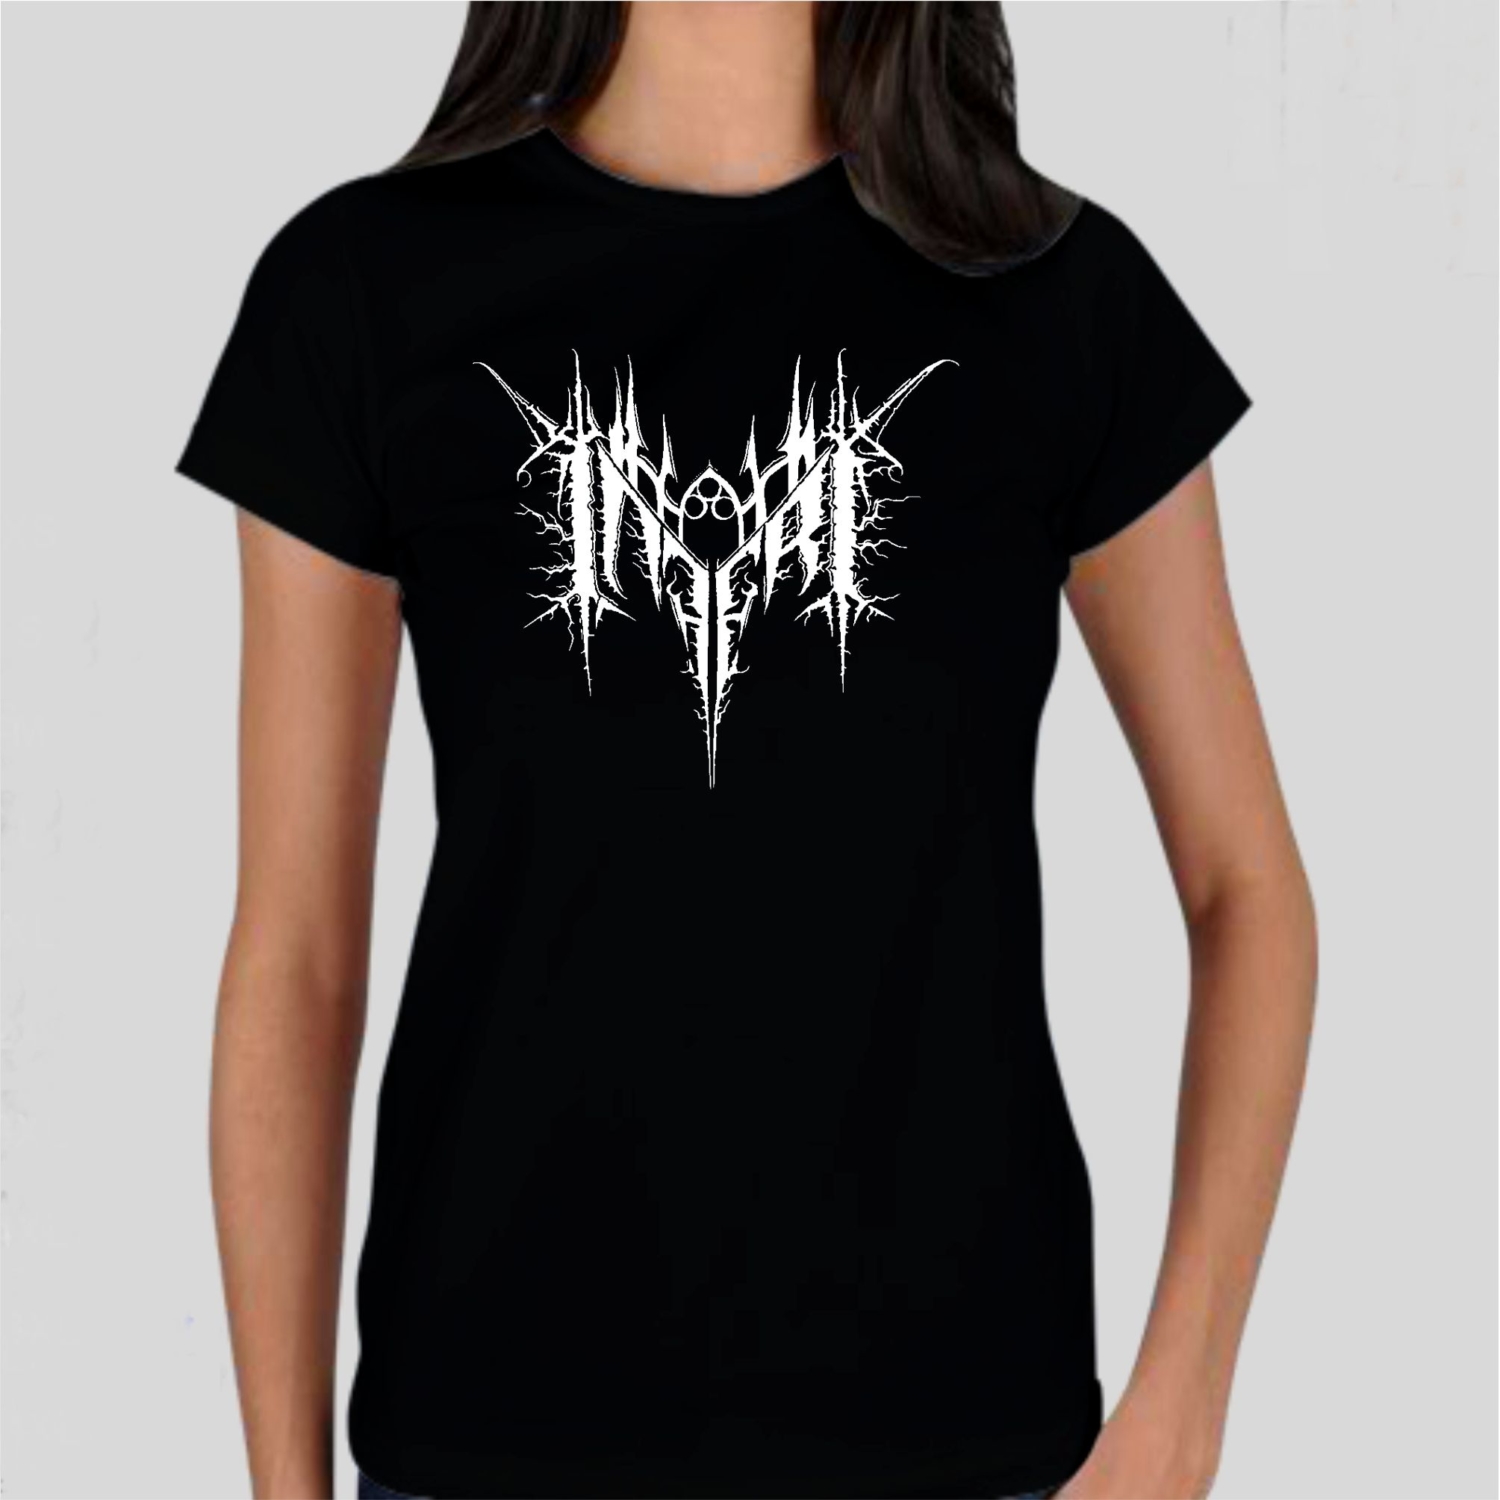 Inferi Logo GirlieT-Shirt – Metal & Rock T-shirts and Accessories